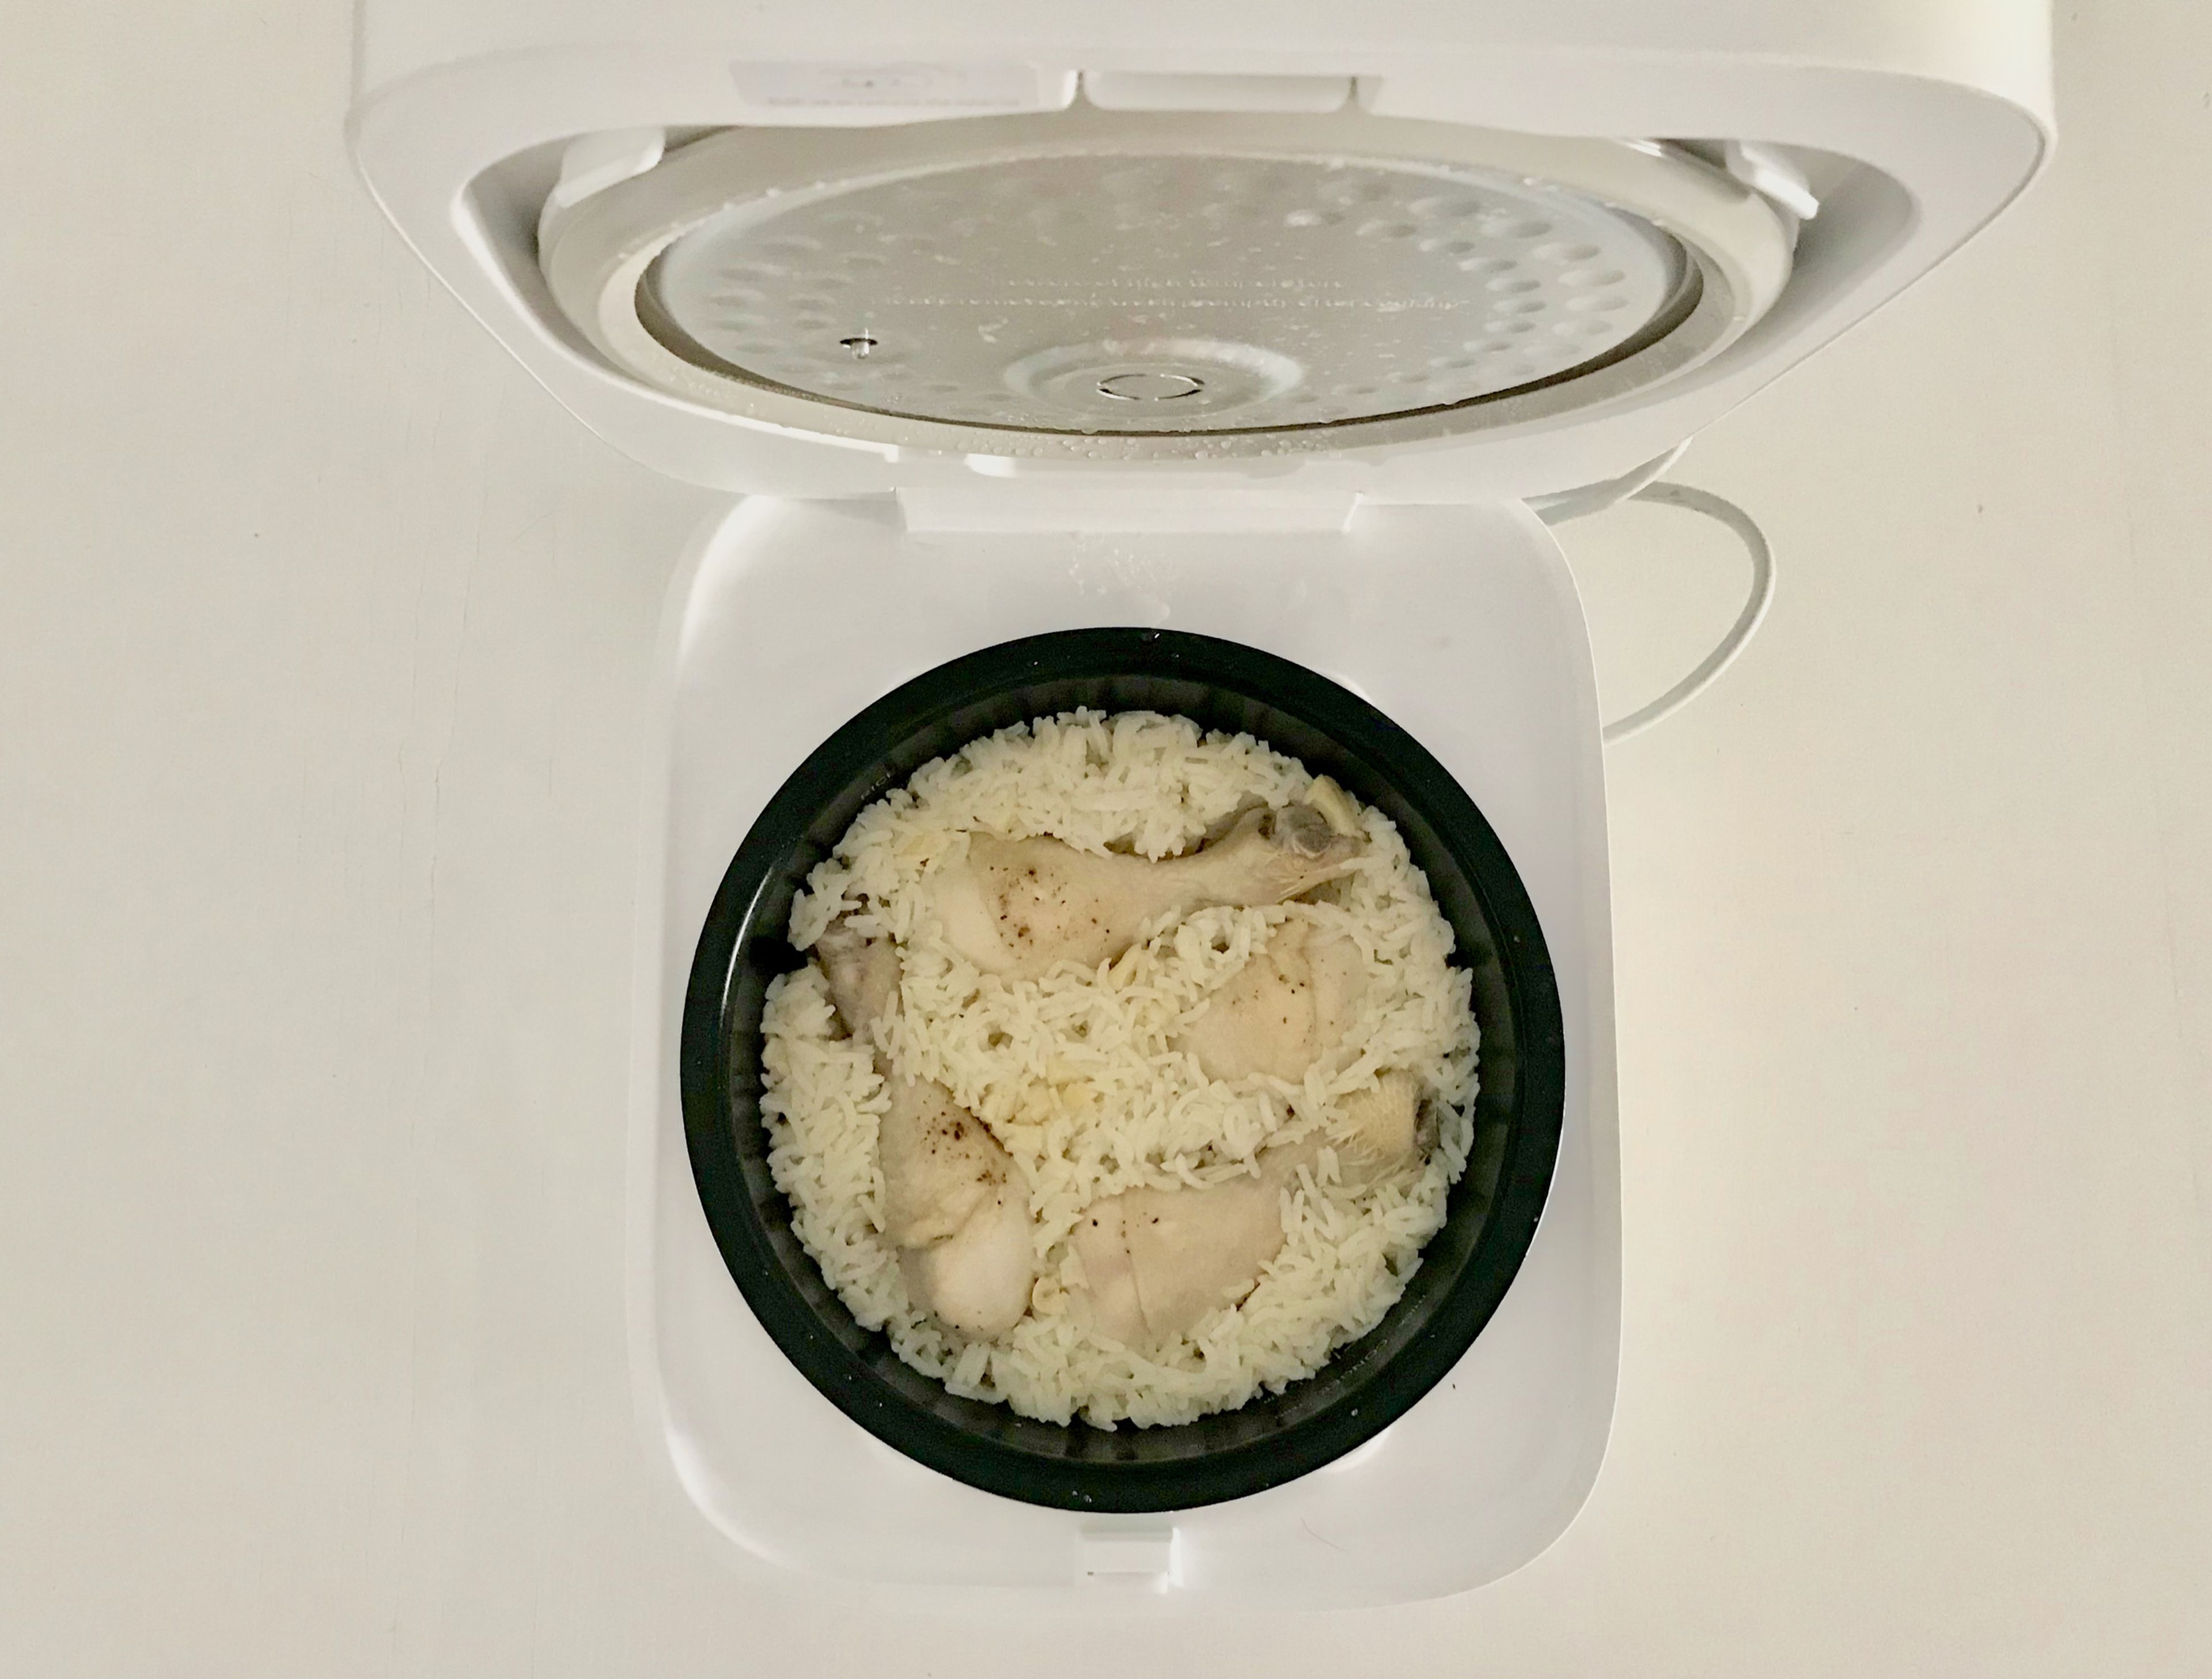 Mi rice cooker